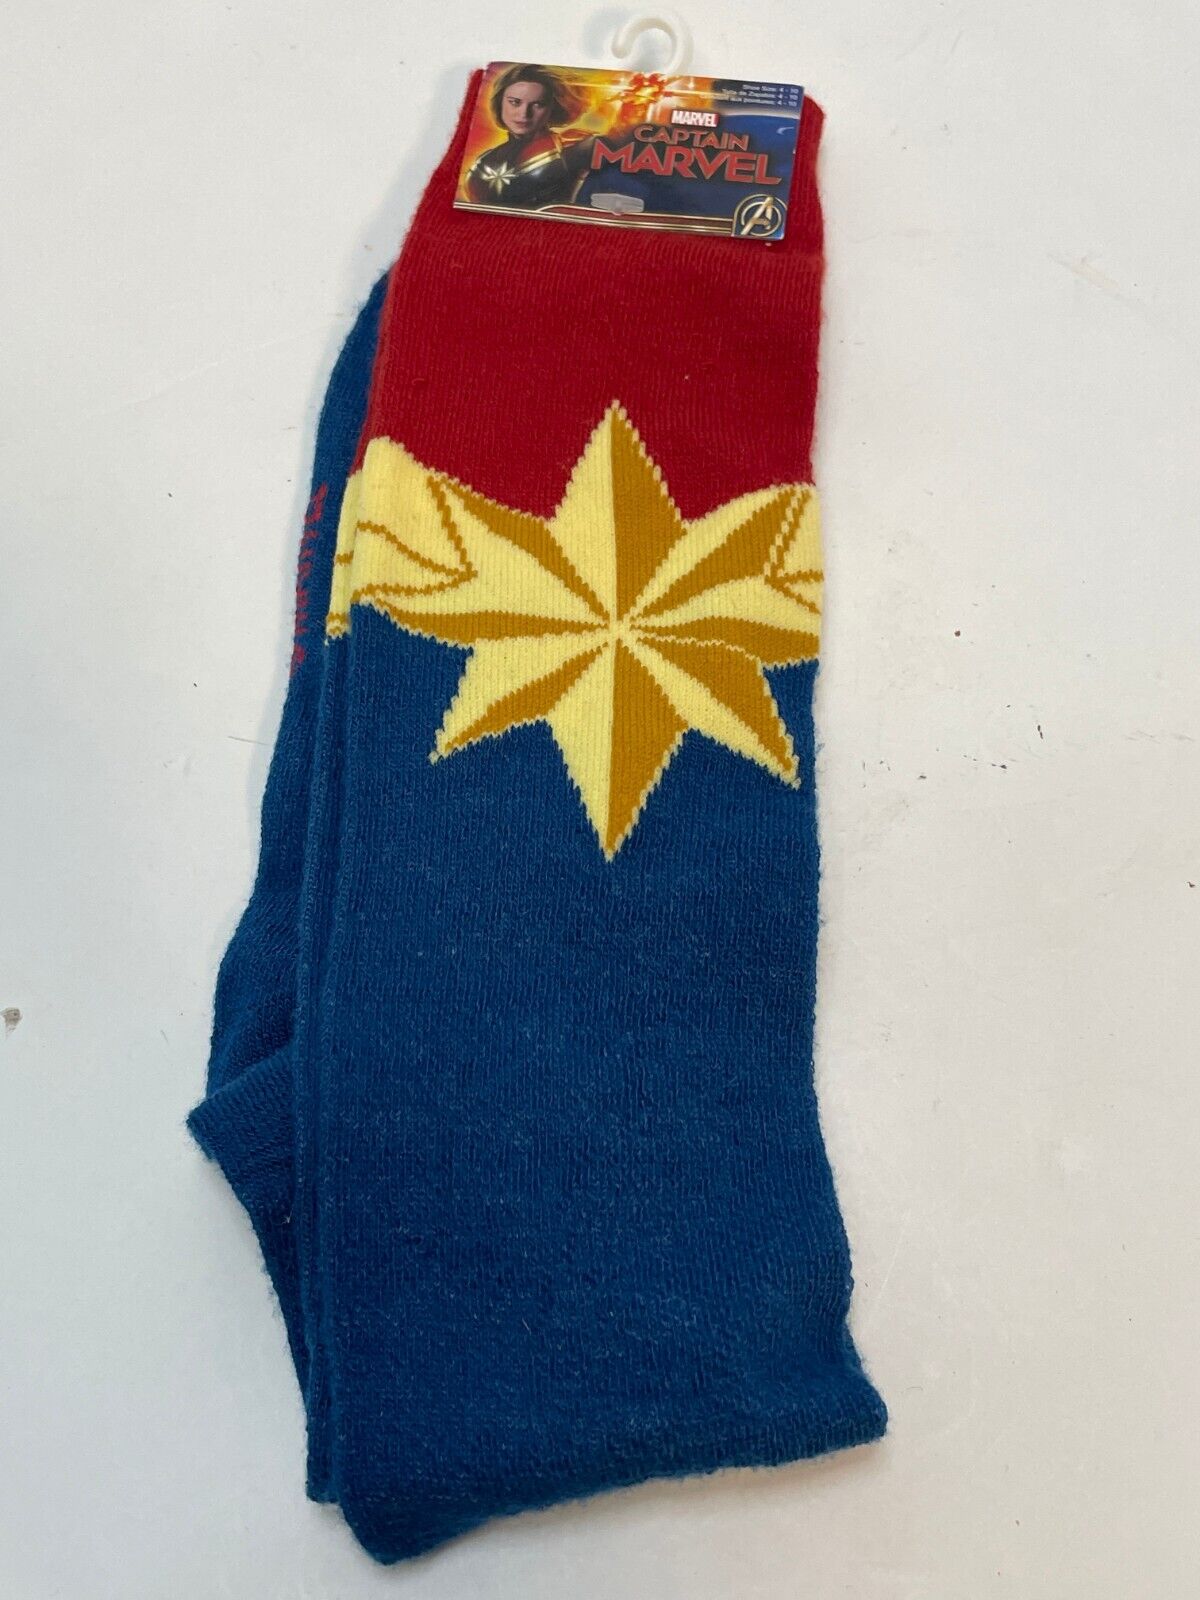 Marvel Comics Captain Marvel Star Crew Socks shoe size 4 - 10 We got This new